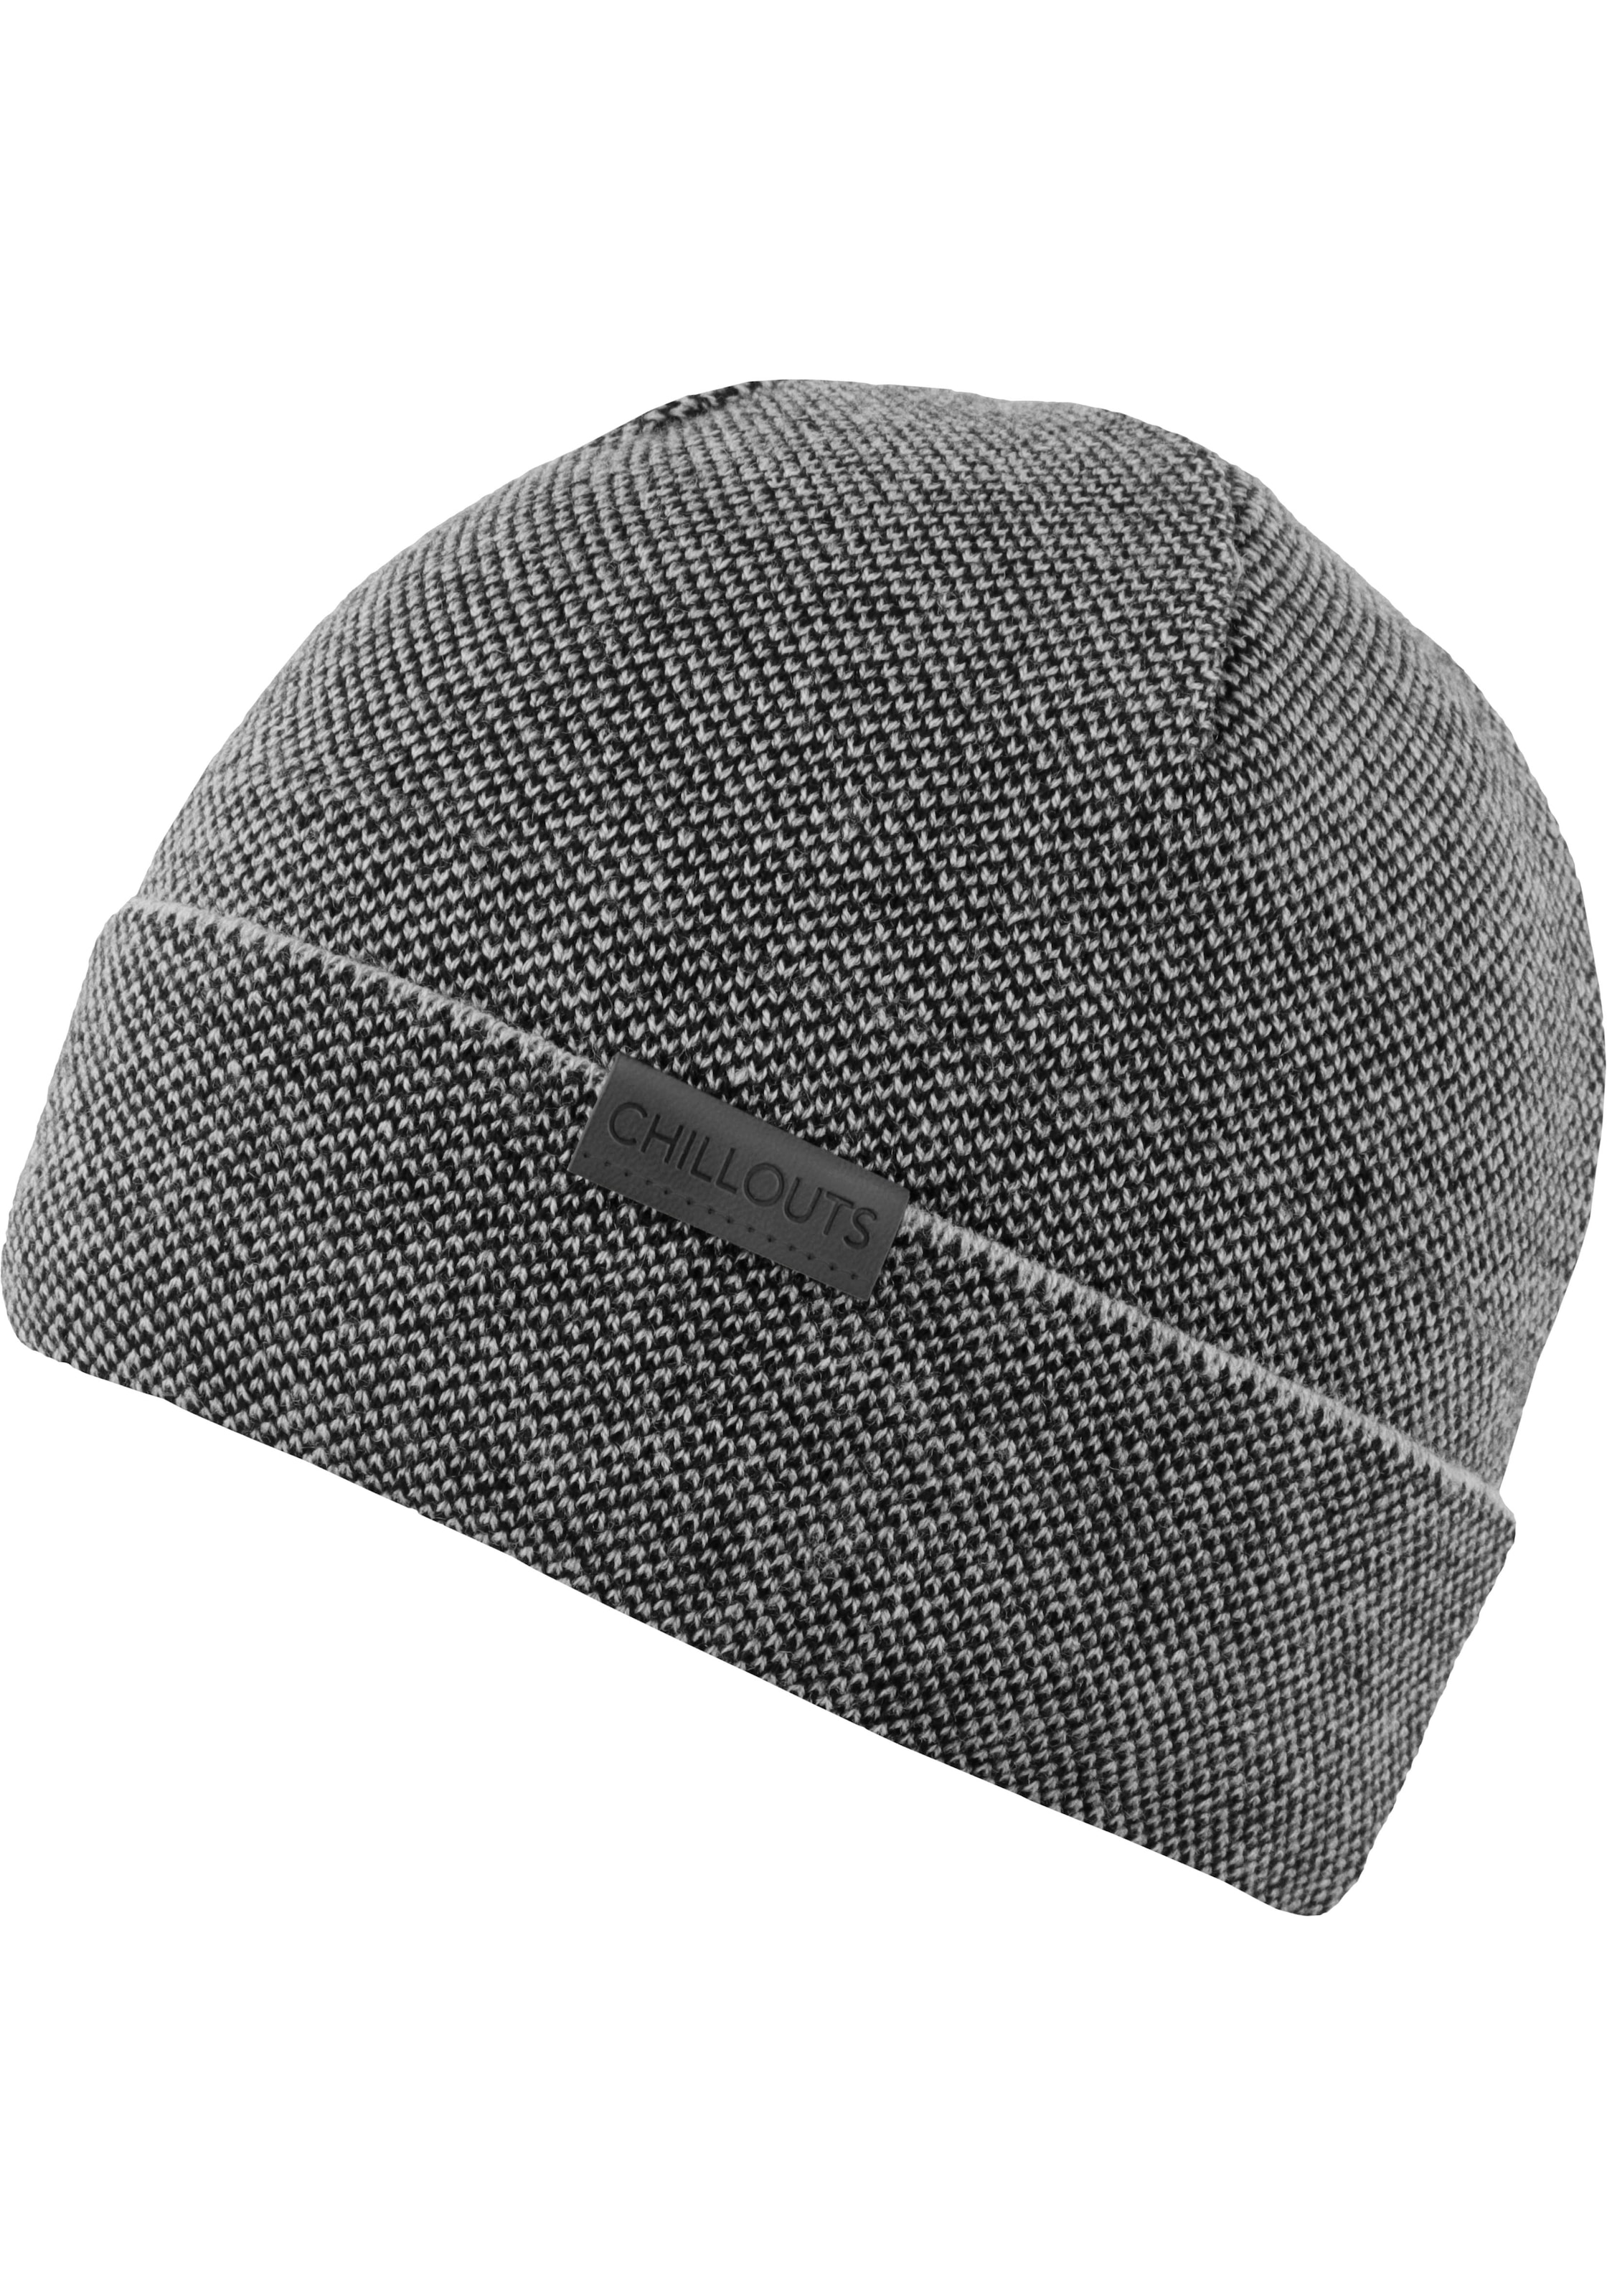 chillouts Strickmütze »Kilian shoppen Hat« bei online OTTO